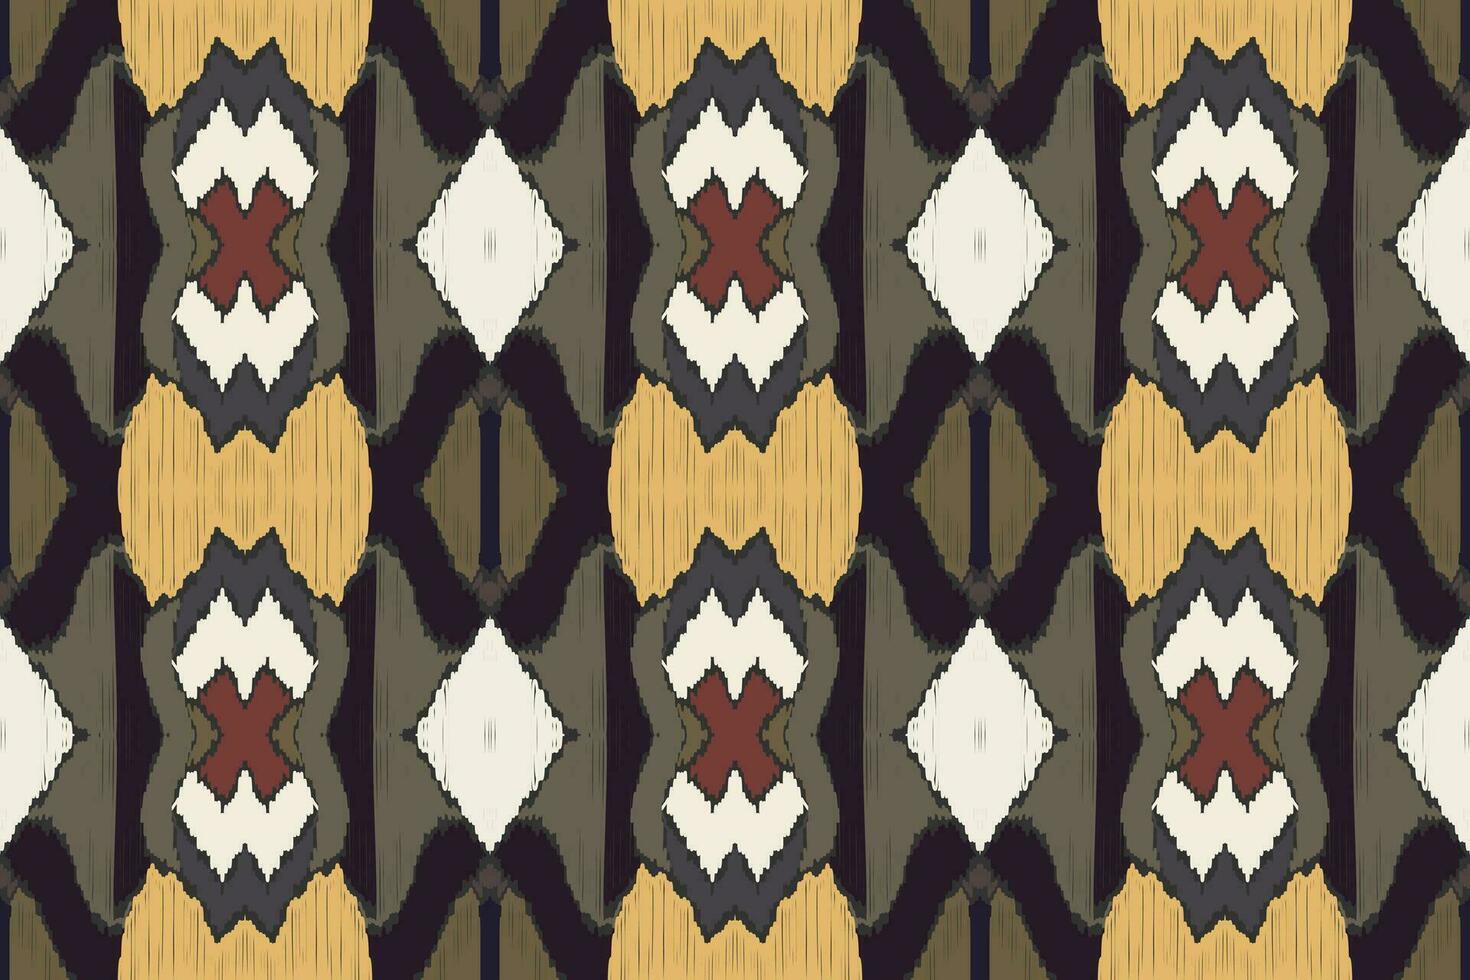 Motif Ikat Seamless Pattern Embroidery Background. Ikat Damask Geometric Ethnic Oriental Pattern Traditional. Ikat Aztec Style Abstract Design for Print Texture,fabric,saree,sari,carpet. vector